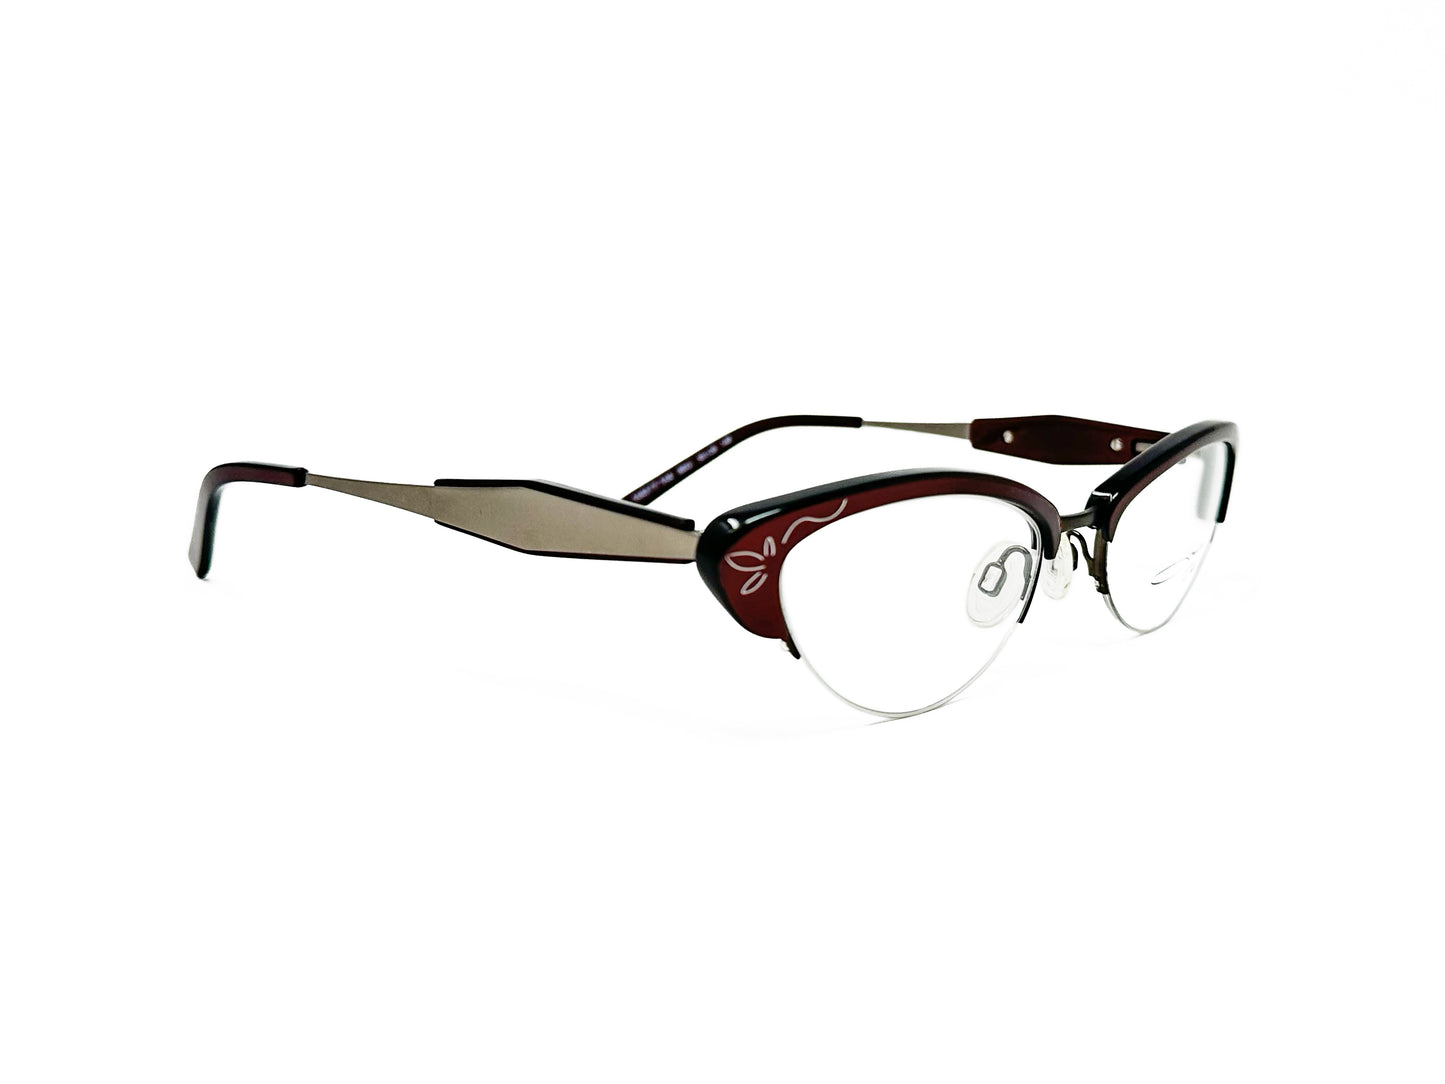 Jonathan Cate half-rim, curved, cat-eye optical frames. Model: Yakety Yak. Color: BRG - Burgundy. Side view.